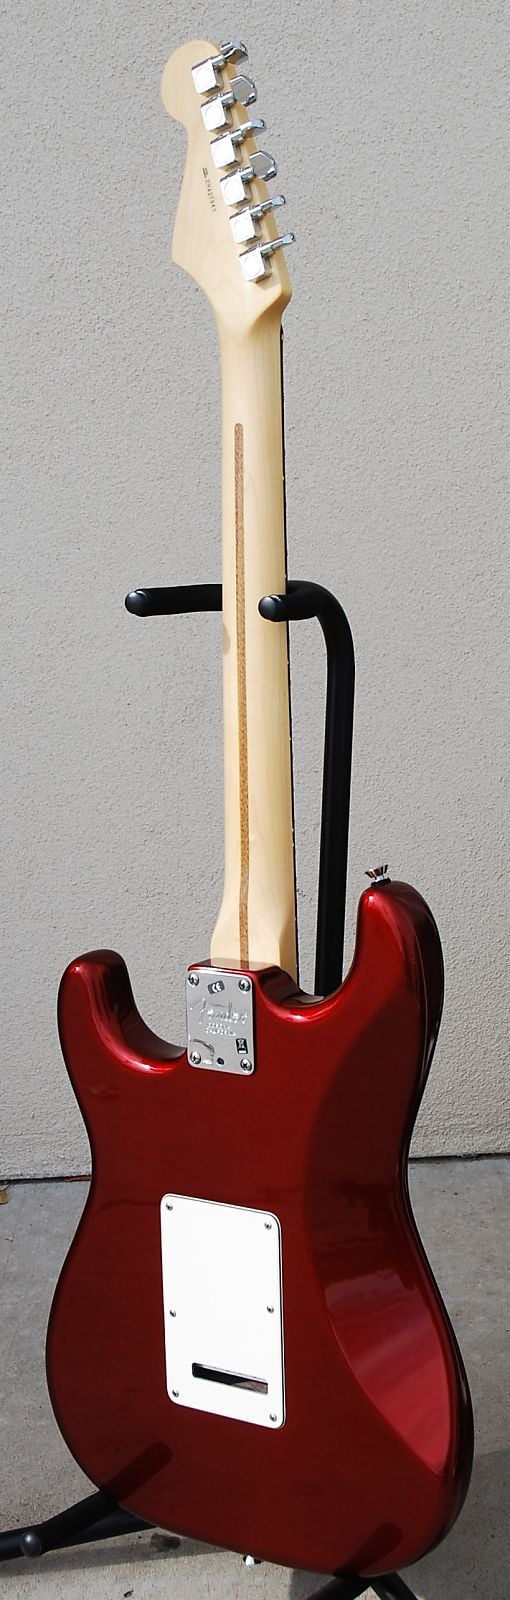 American Standard Stratocaster Neck